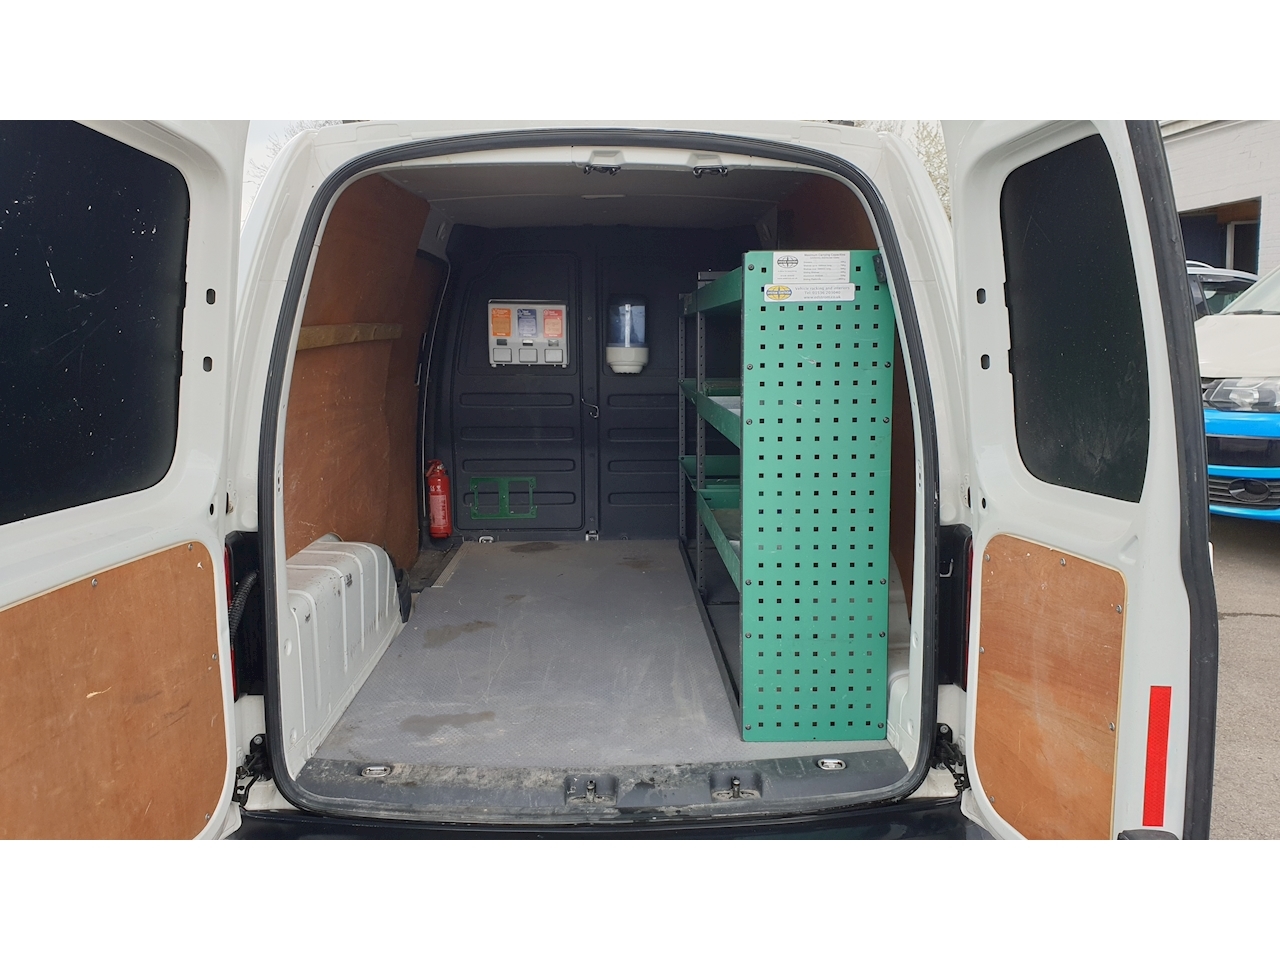 Caddy Maxi TDI C20 Startline 1.6 4dr Panel Van Manual Diesel